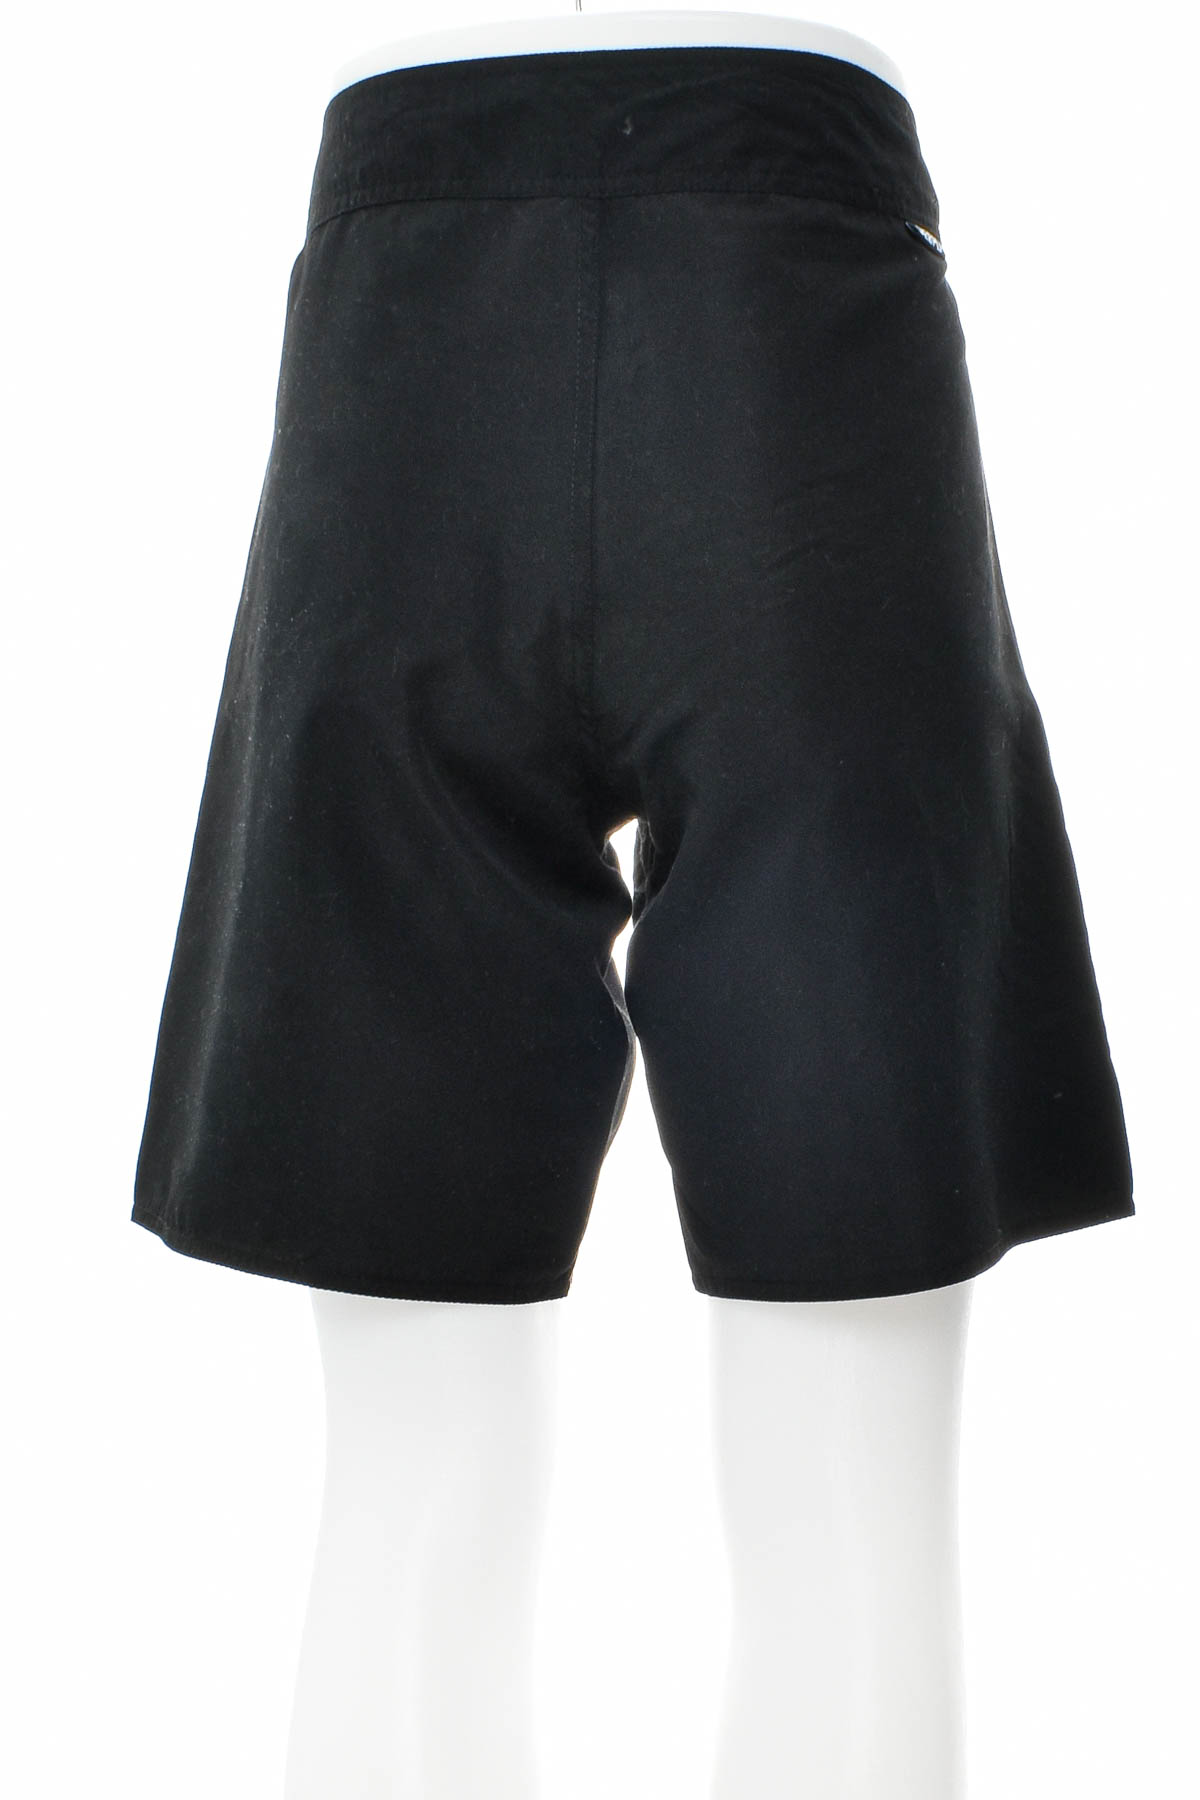 Men's shorts - DEEPLY - 1